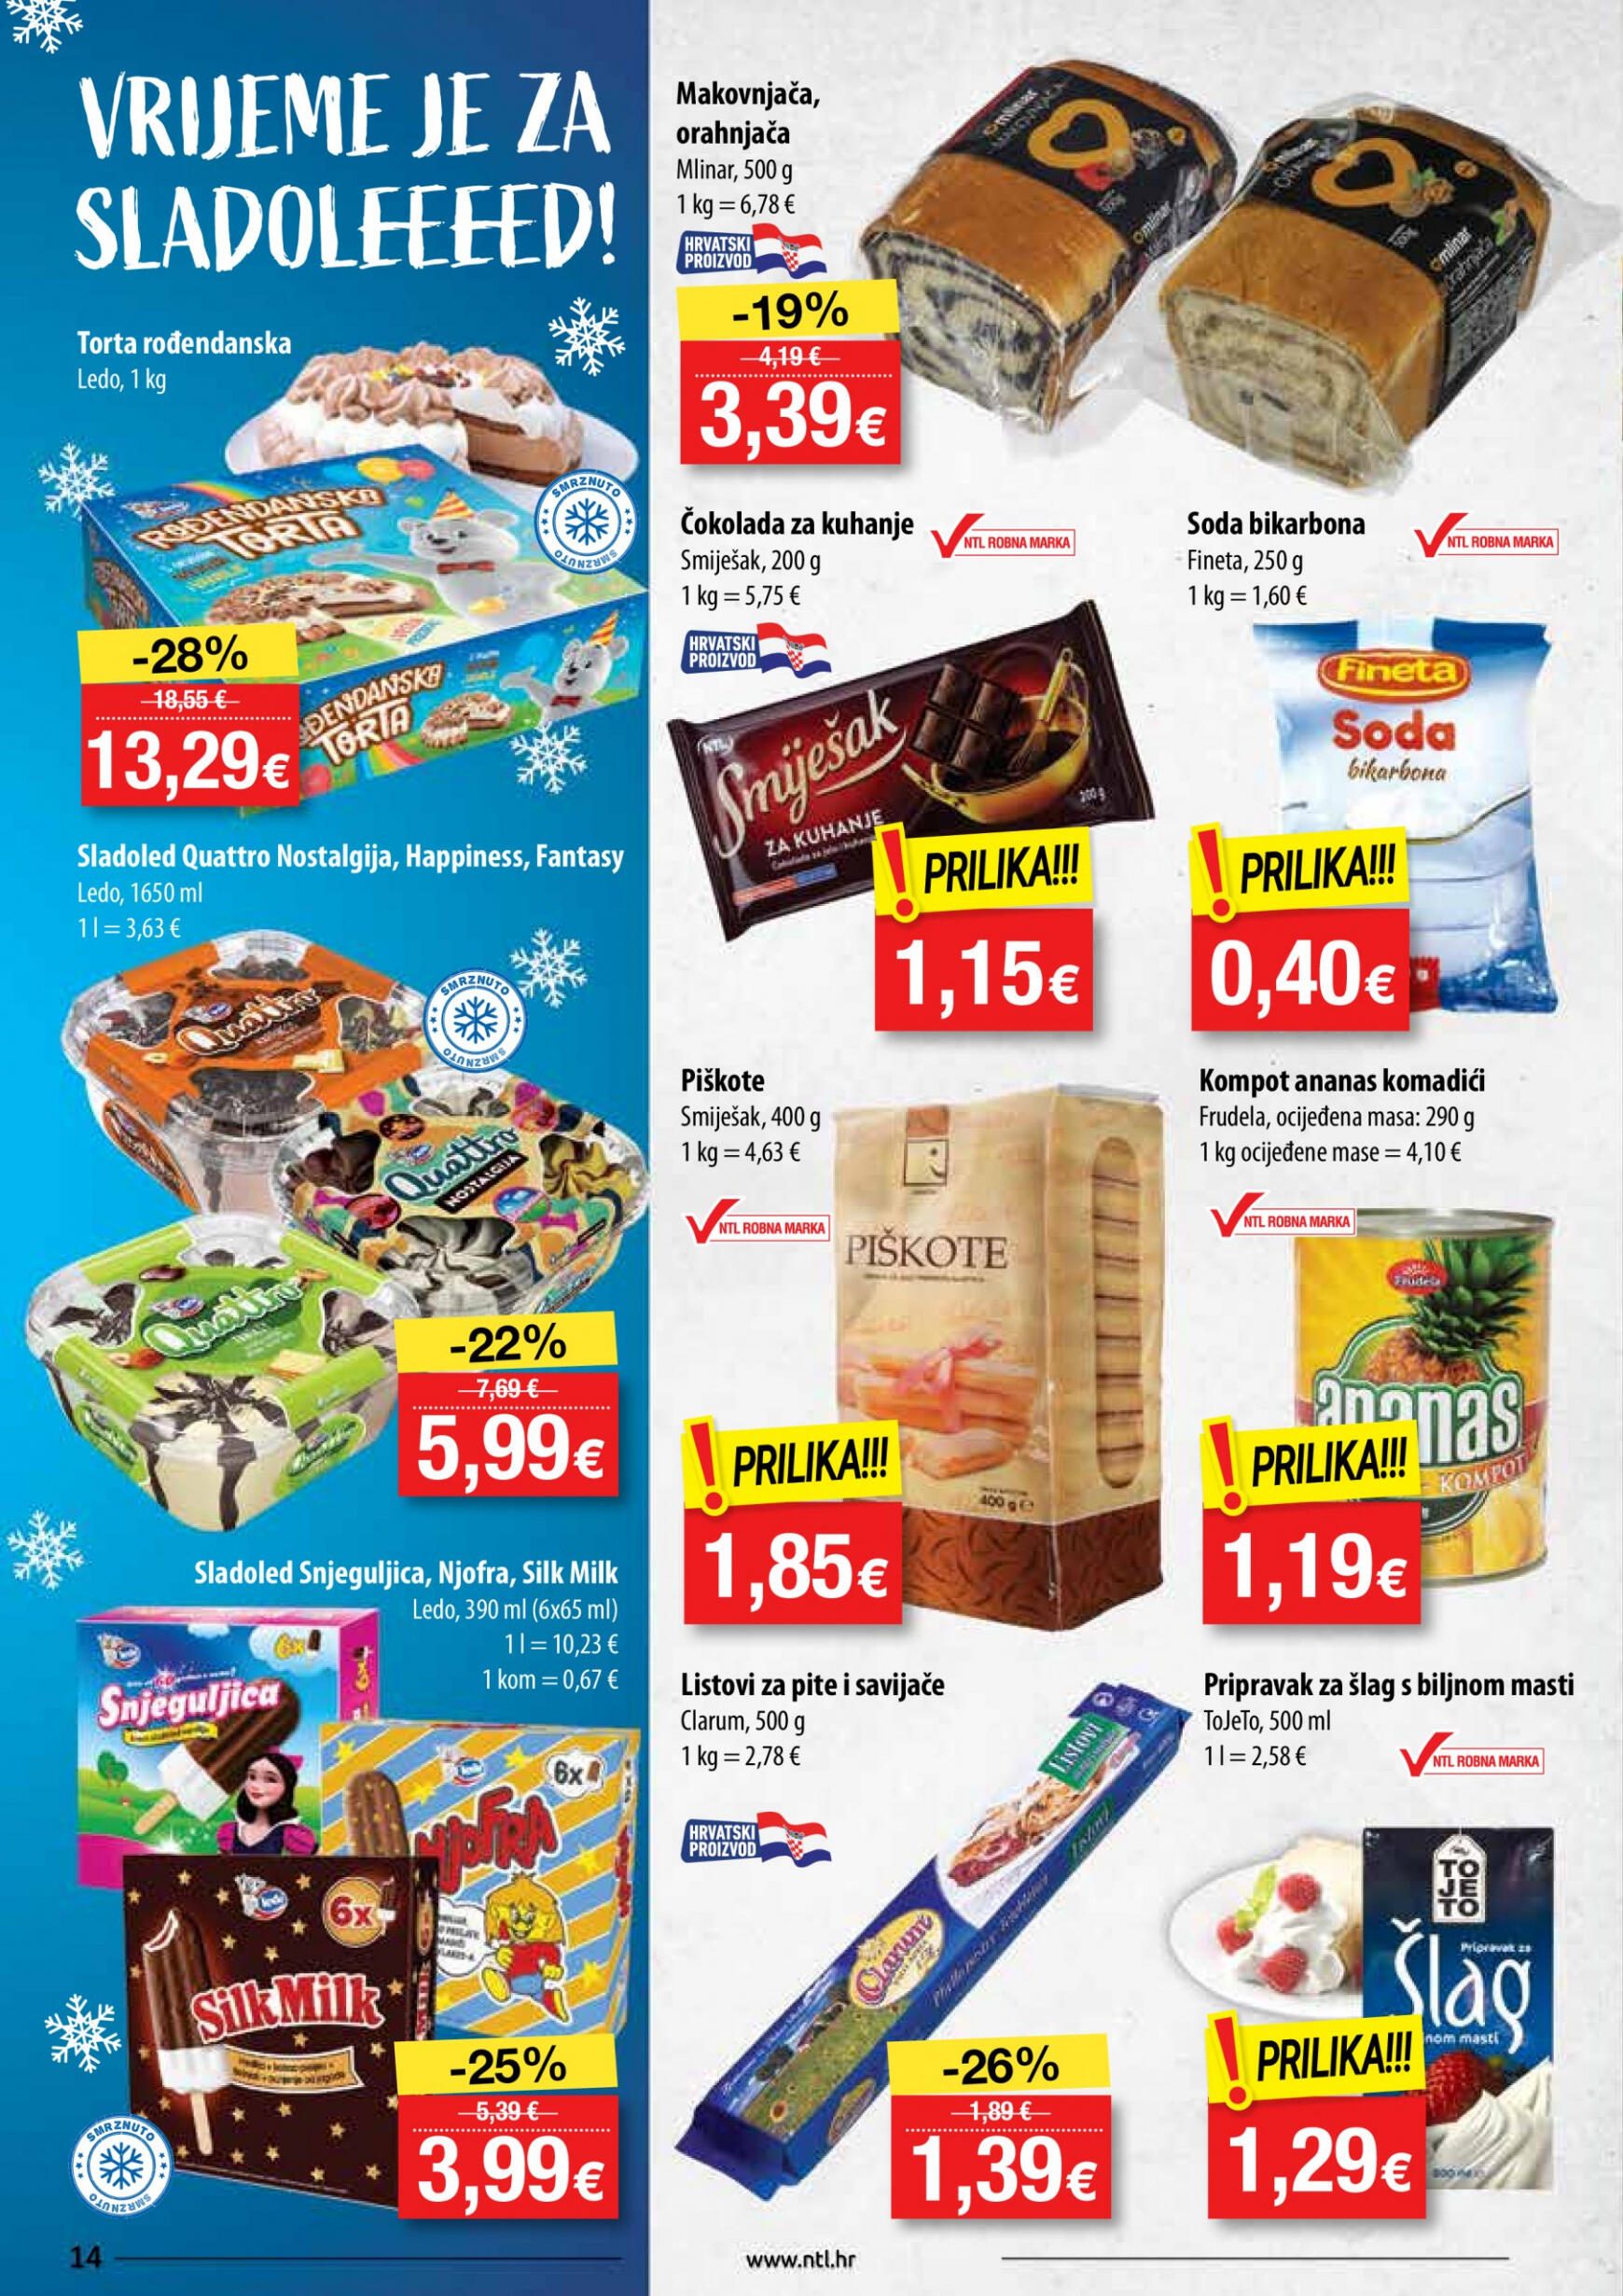 ntl - Novi katalog NTL - Supermarketi Soblinec, Krapina, Duga Resa 10.04. - 16.04. - page: 14